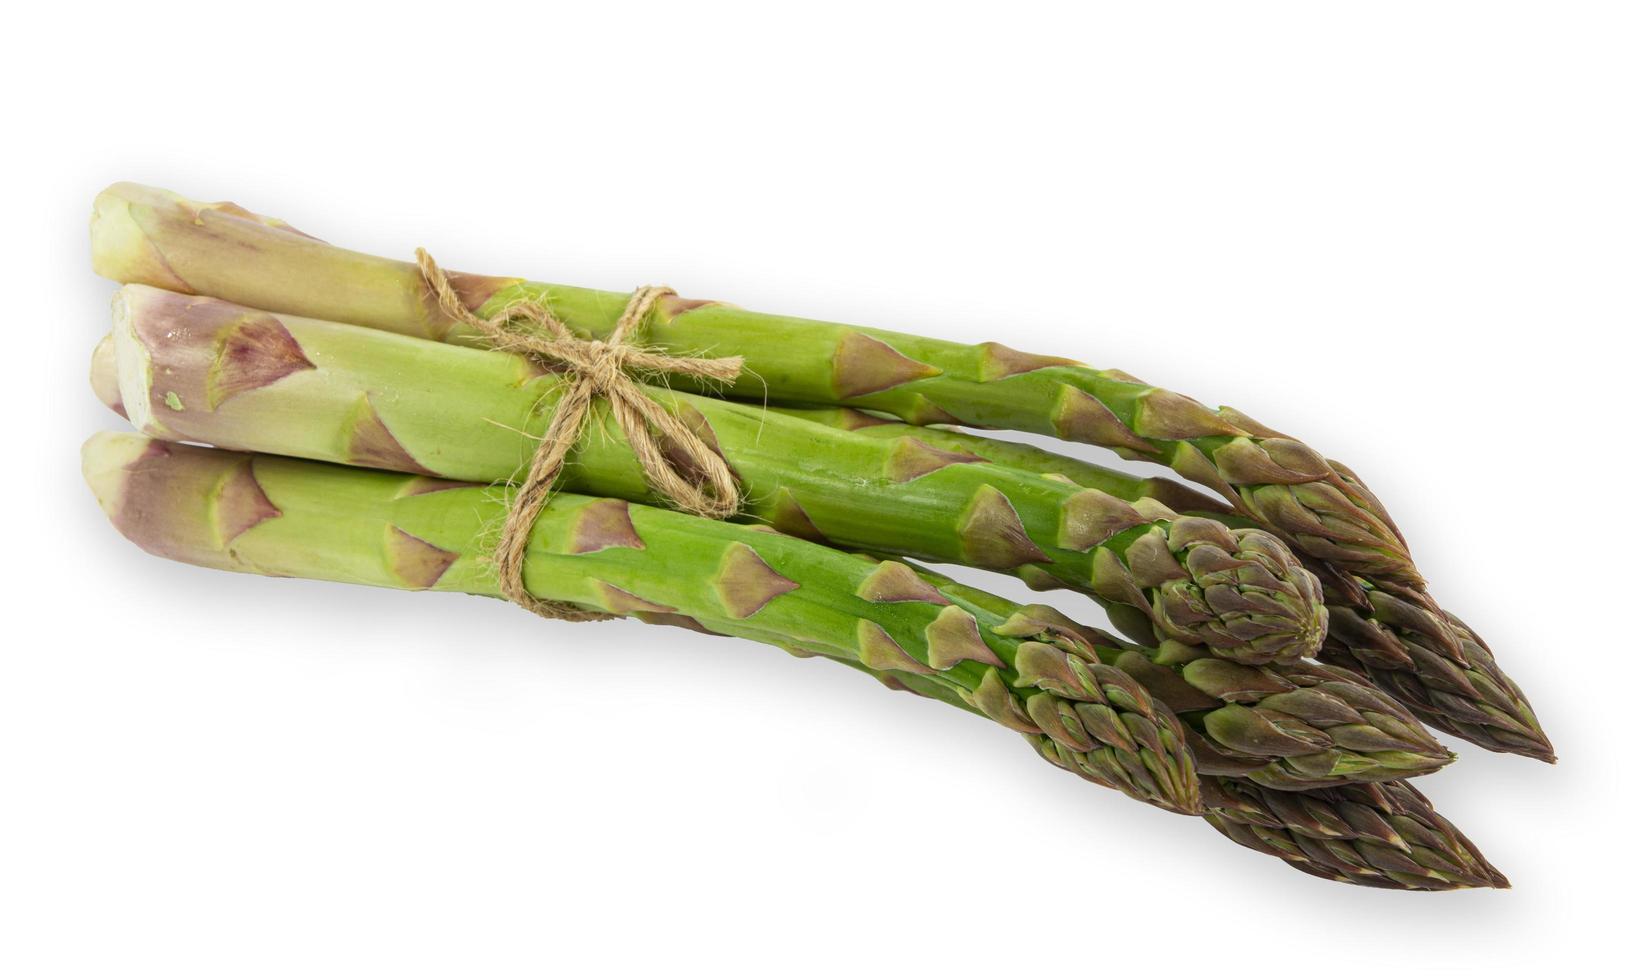 asparagi verdi freschi vegetariani. vegetale isolato su sfondo bianco foto